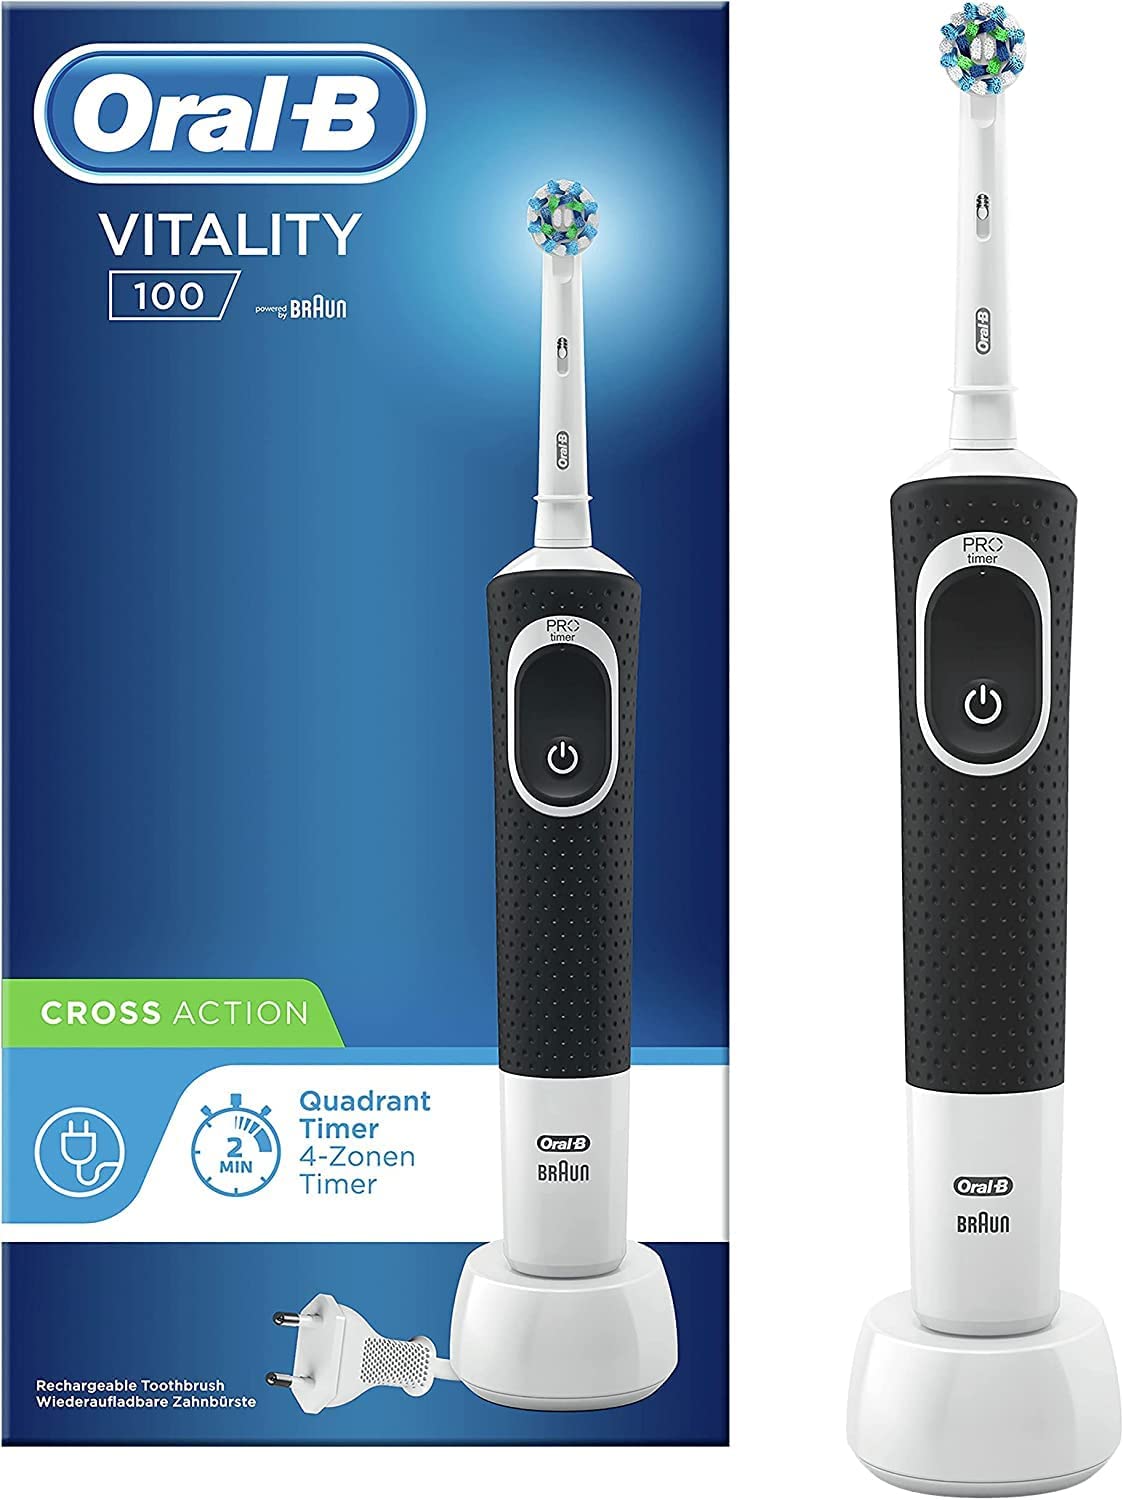 Oral-B Vitality 100 versus Oral-B Vitality Pro